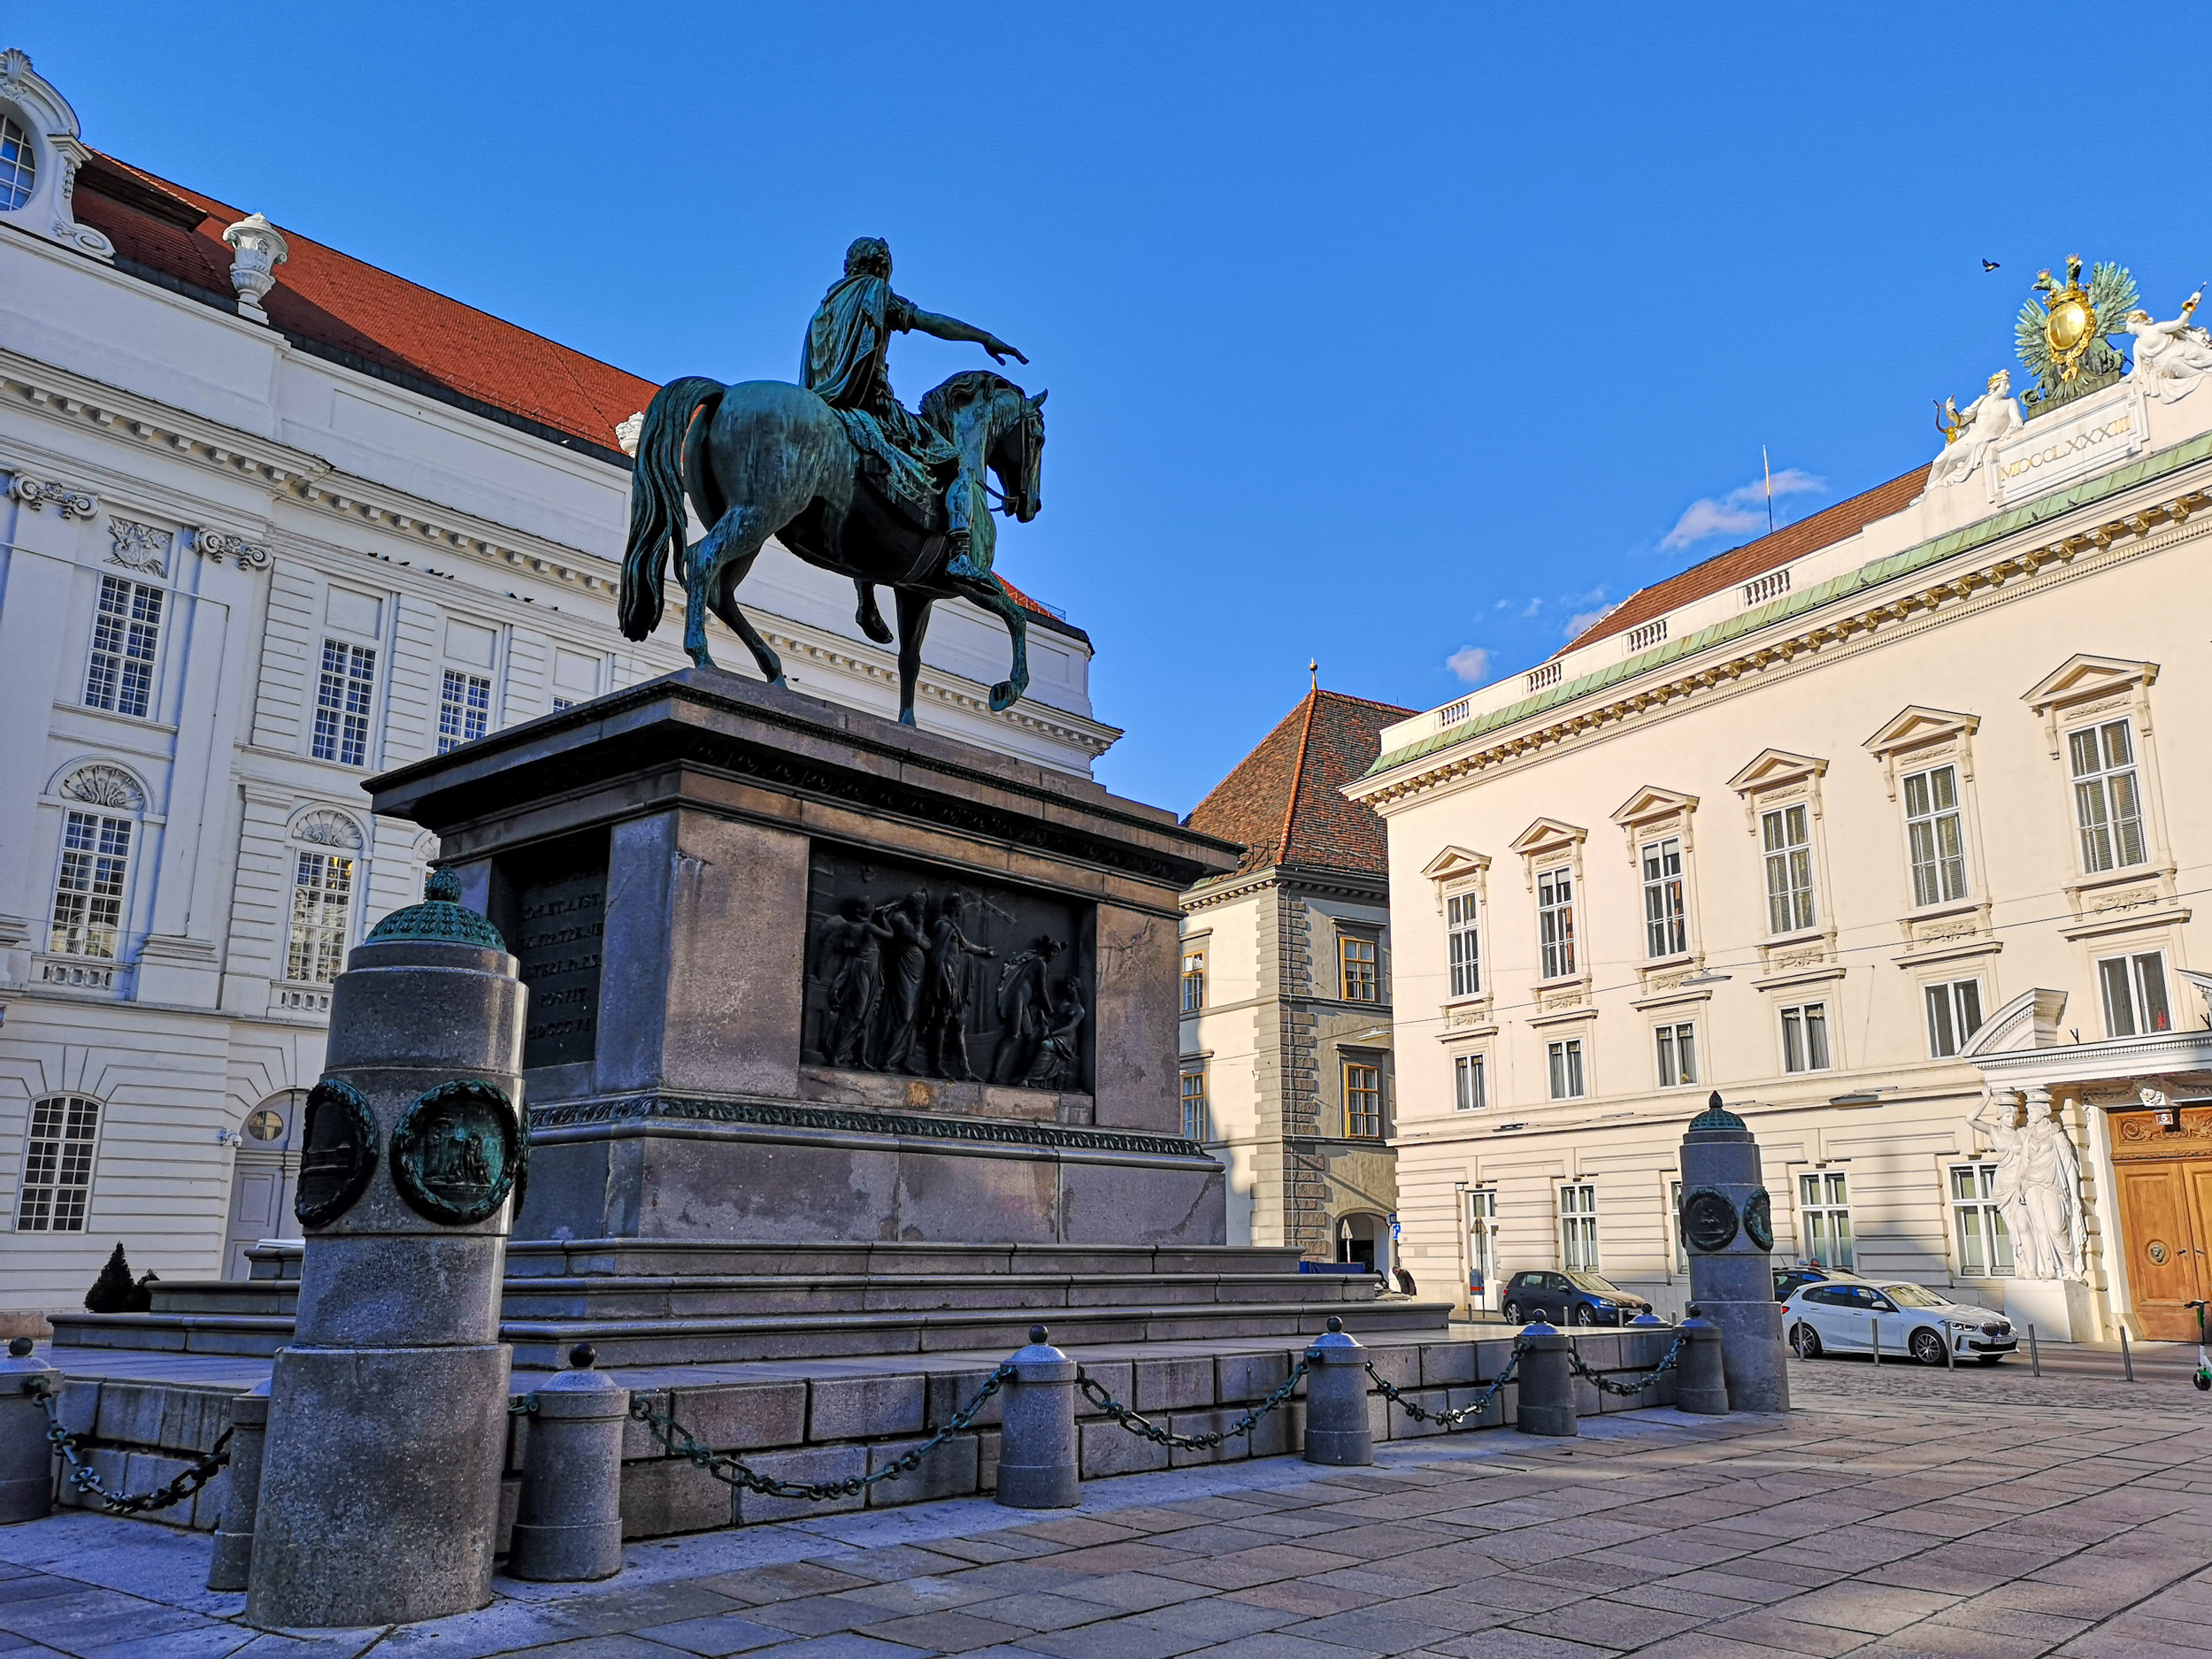 Emperor Josef II statue in Josefsplatz, Vienna